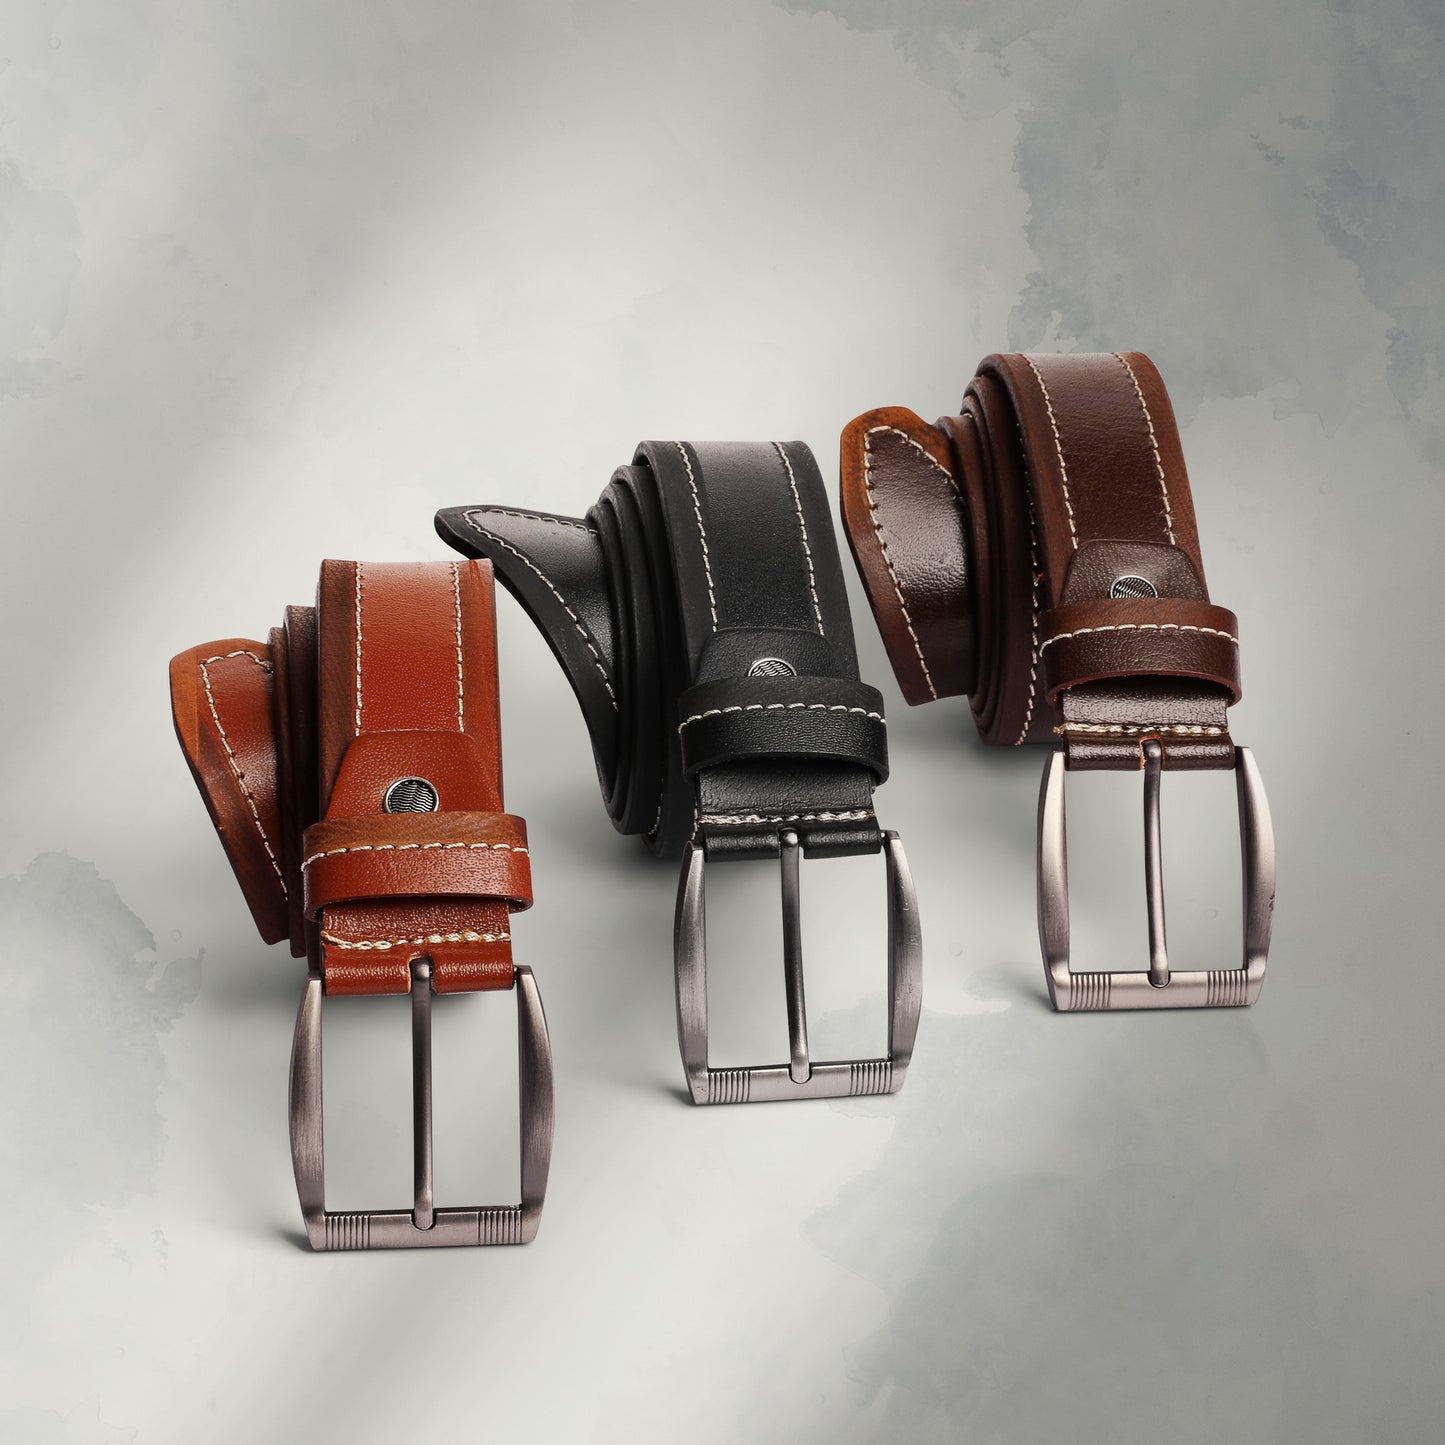 b7 جلد طبيعي من تيستا تورو (Handmade) حزام صناعة يدوية